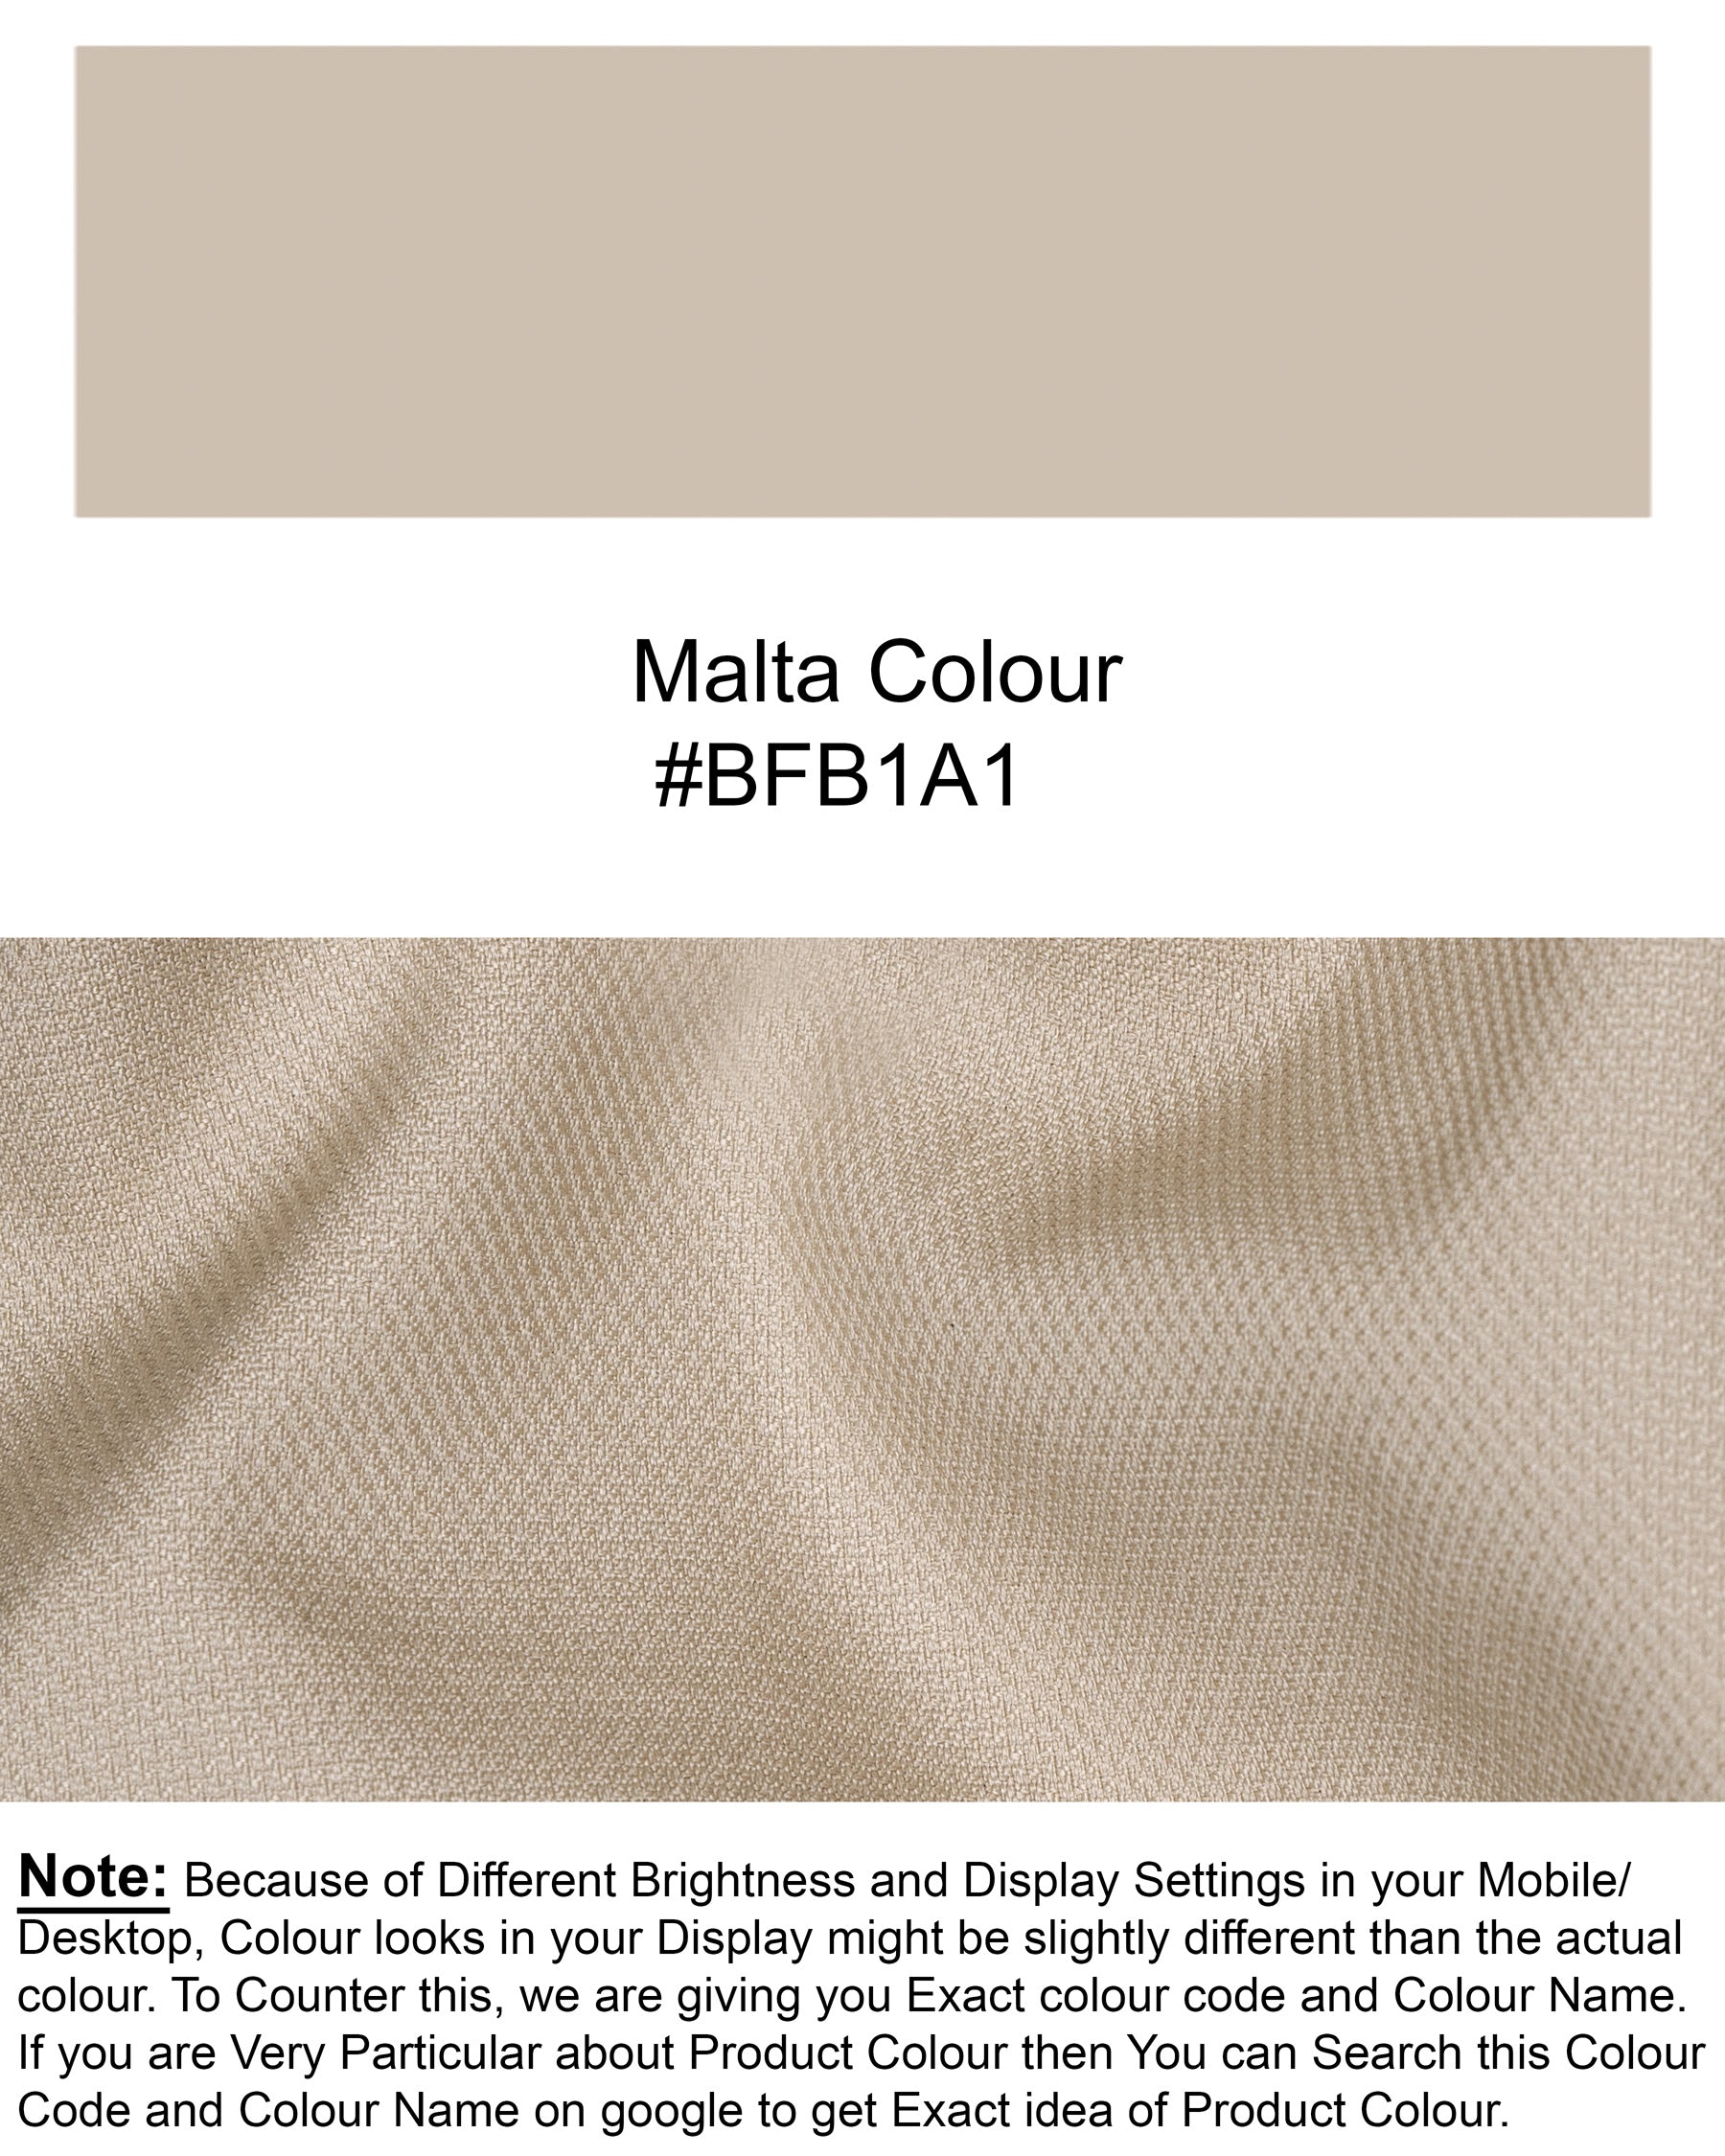 Malta Cream Bandhgala Wool Rich Blazer BL1425-BG-36, BL1425-BG-38, BL1425-BG-40, BL1425-BG-42, BL1425-BG-44, BL1425-BG-46, BL1425-BG-48, BL1425-BG-50, BL1425-BG-52, BL1425-BG-54, BL1425-BG-56, BL1425-BG-58, BL1425-BG-60